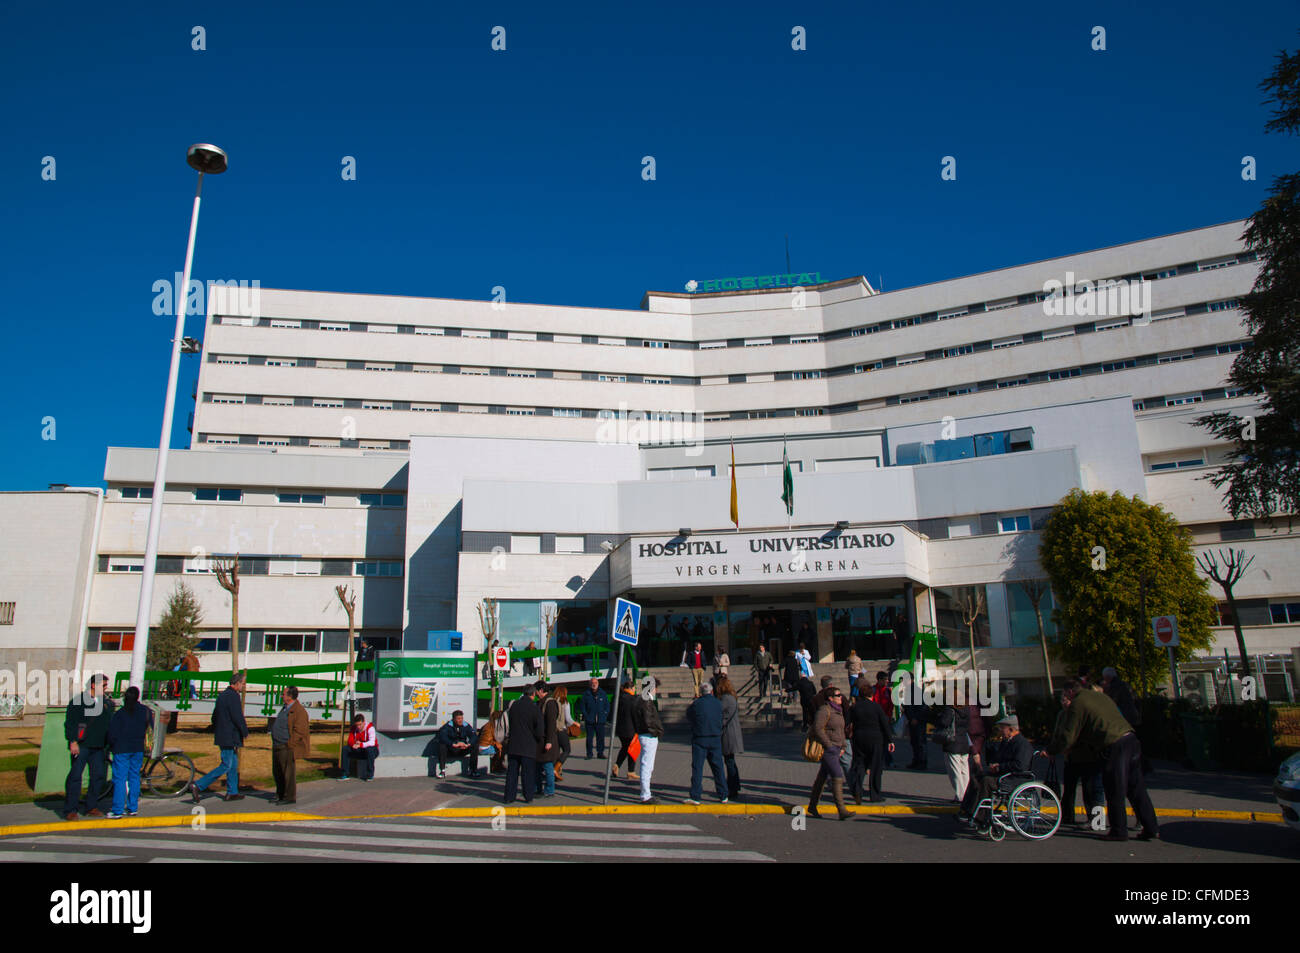 Hospital Universitario Virgen Macarena university hospital central Seville Andalusia Spain Stock Photo